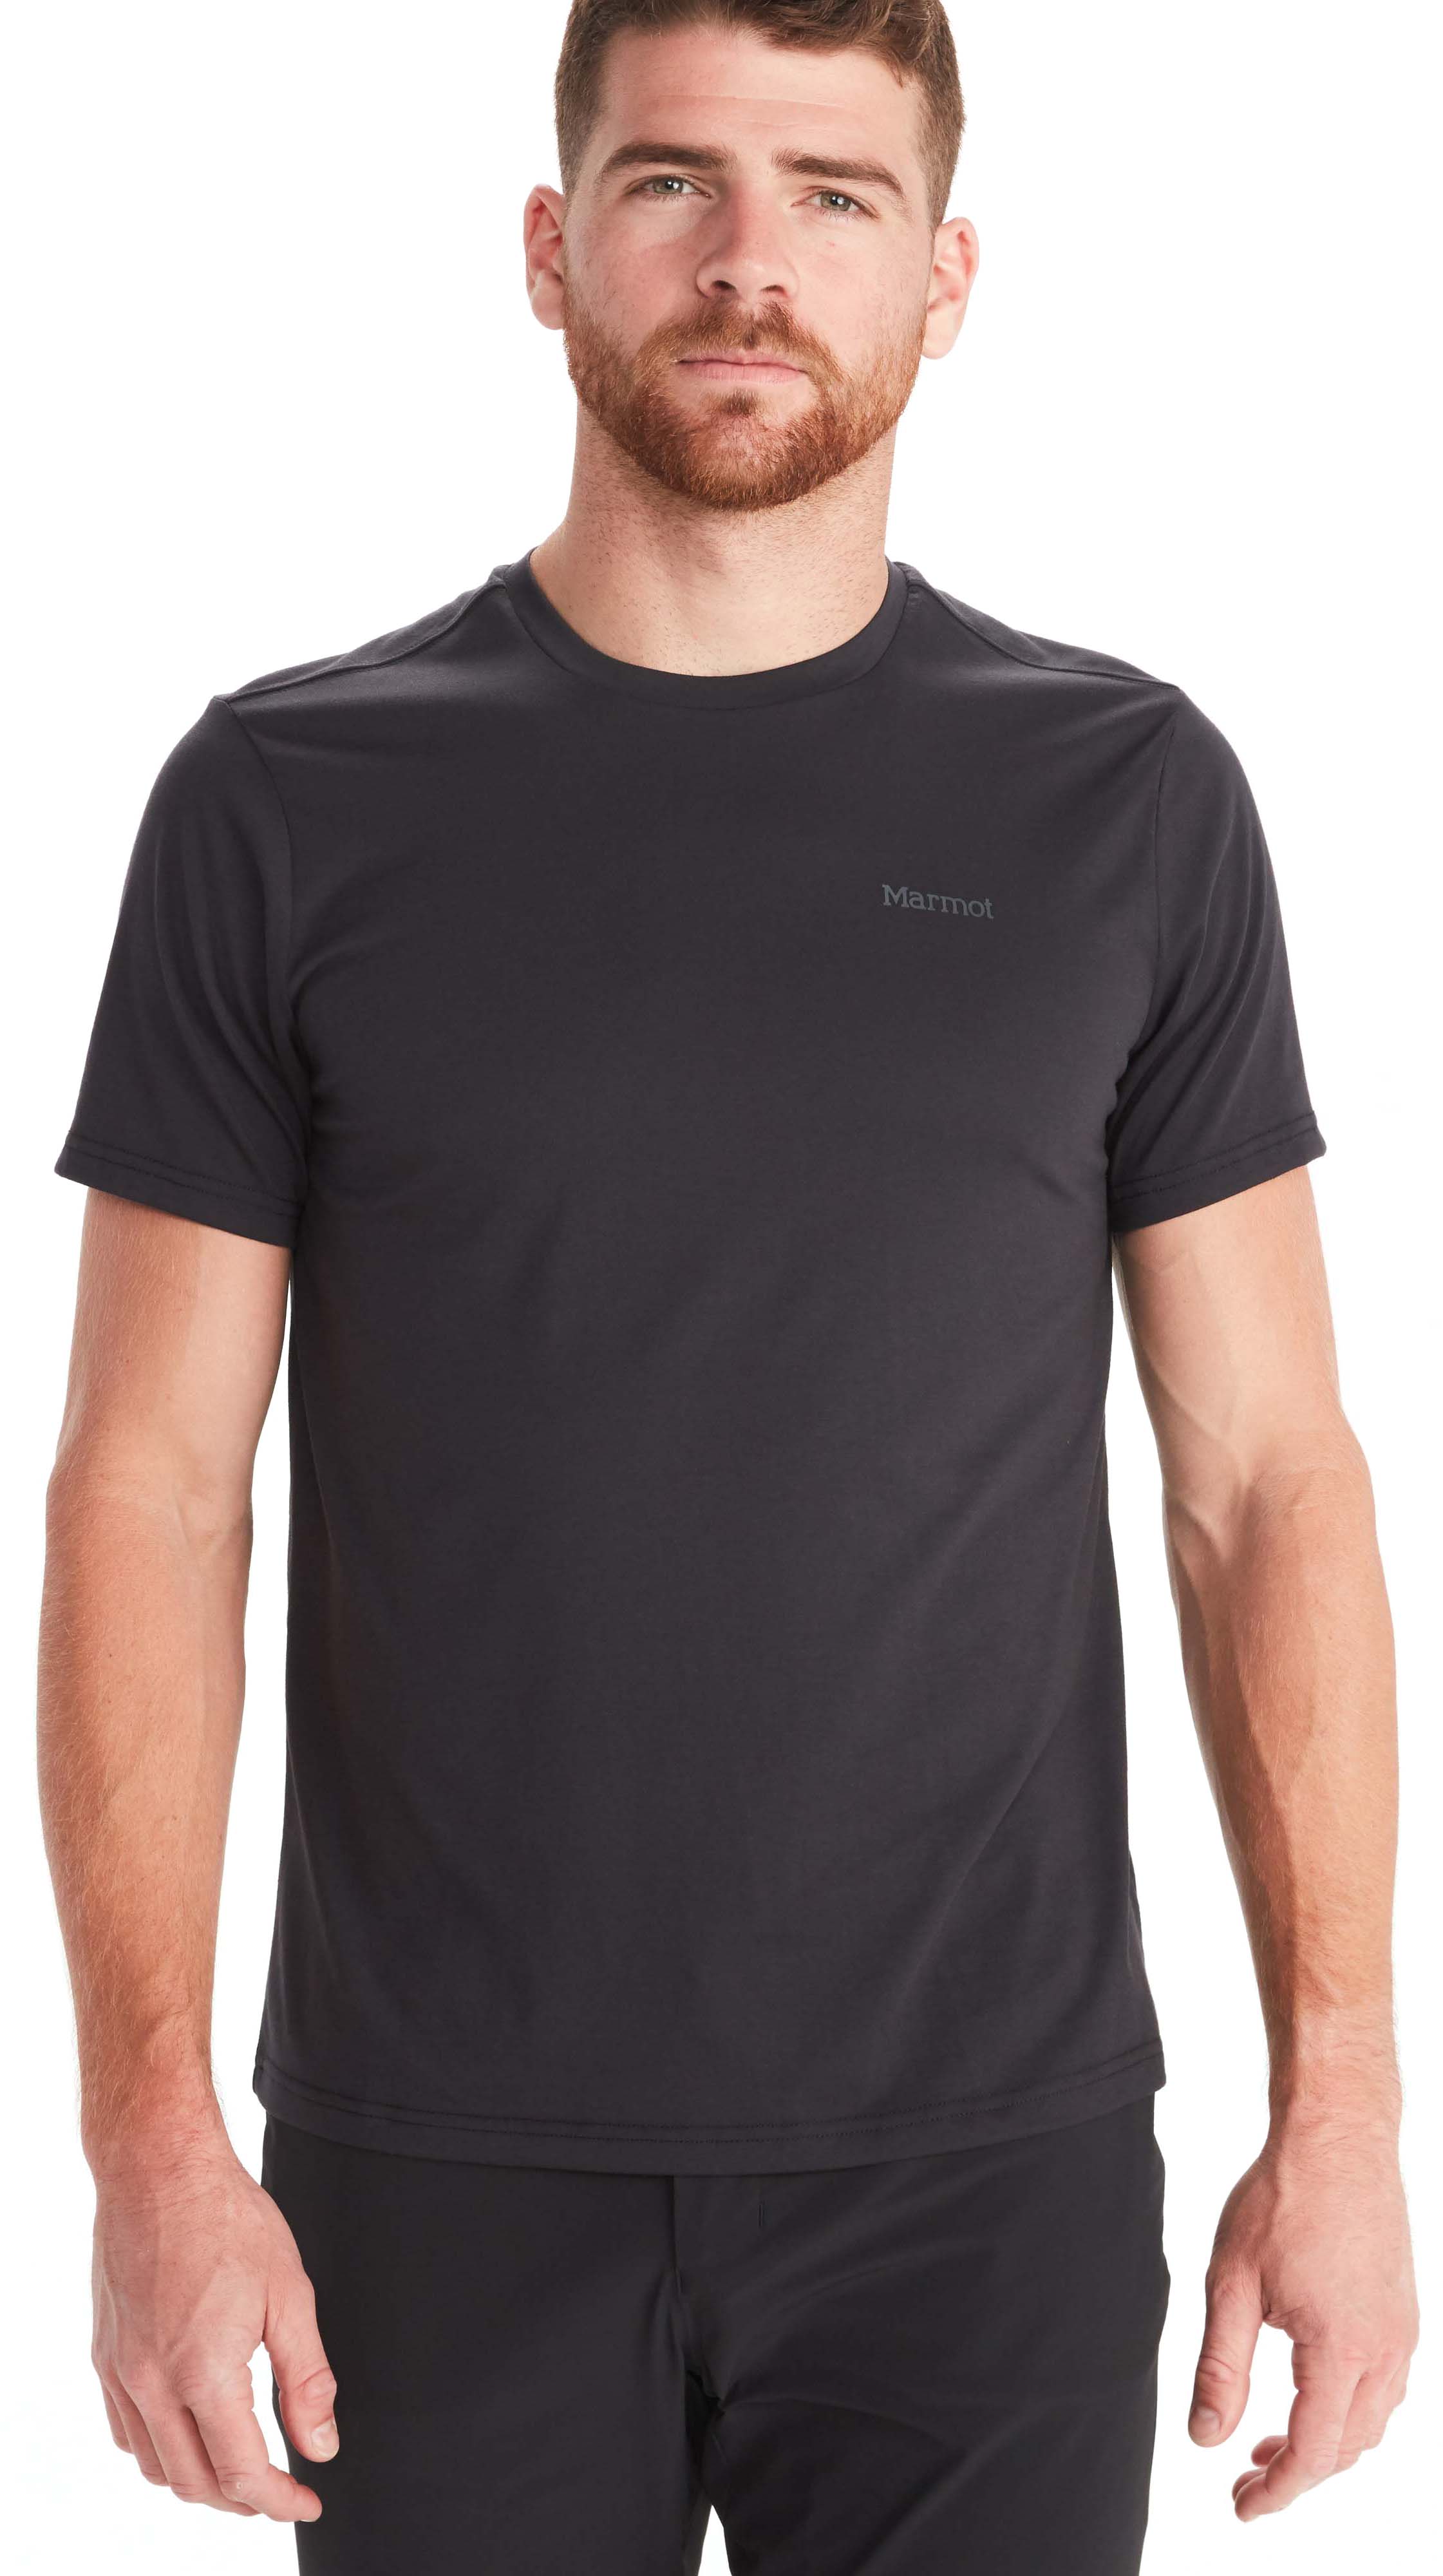 Marmot Crossover Short Sleeve T-Shirt - Men's , Up to 66% Off 